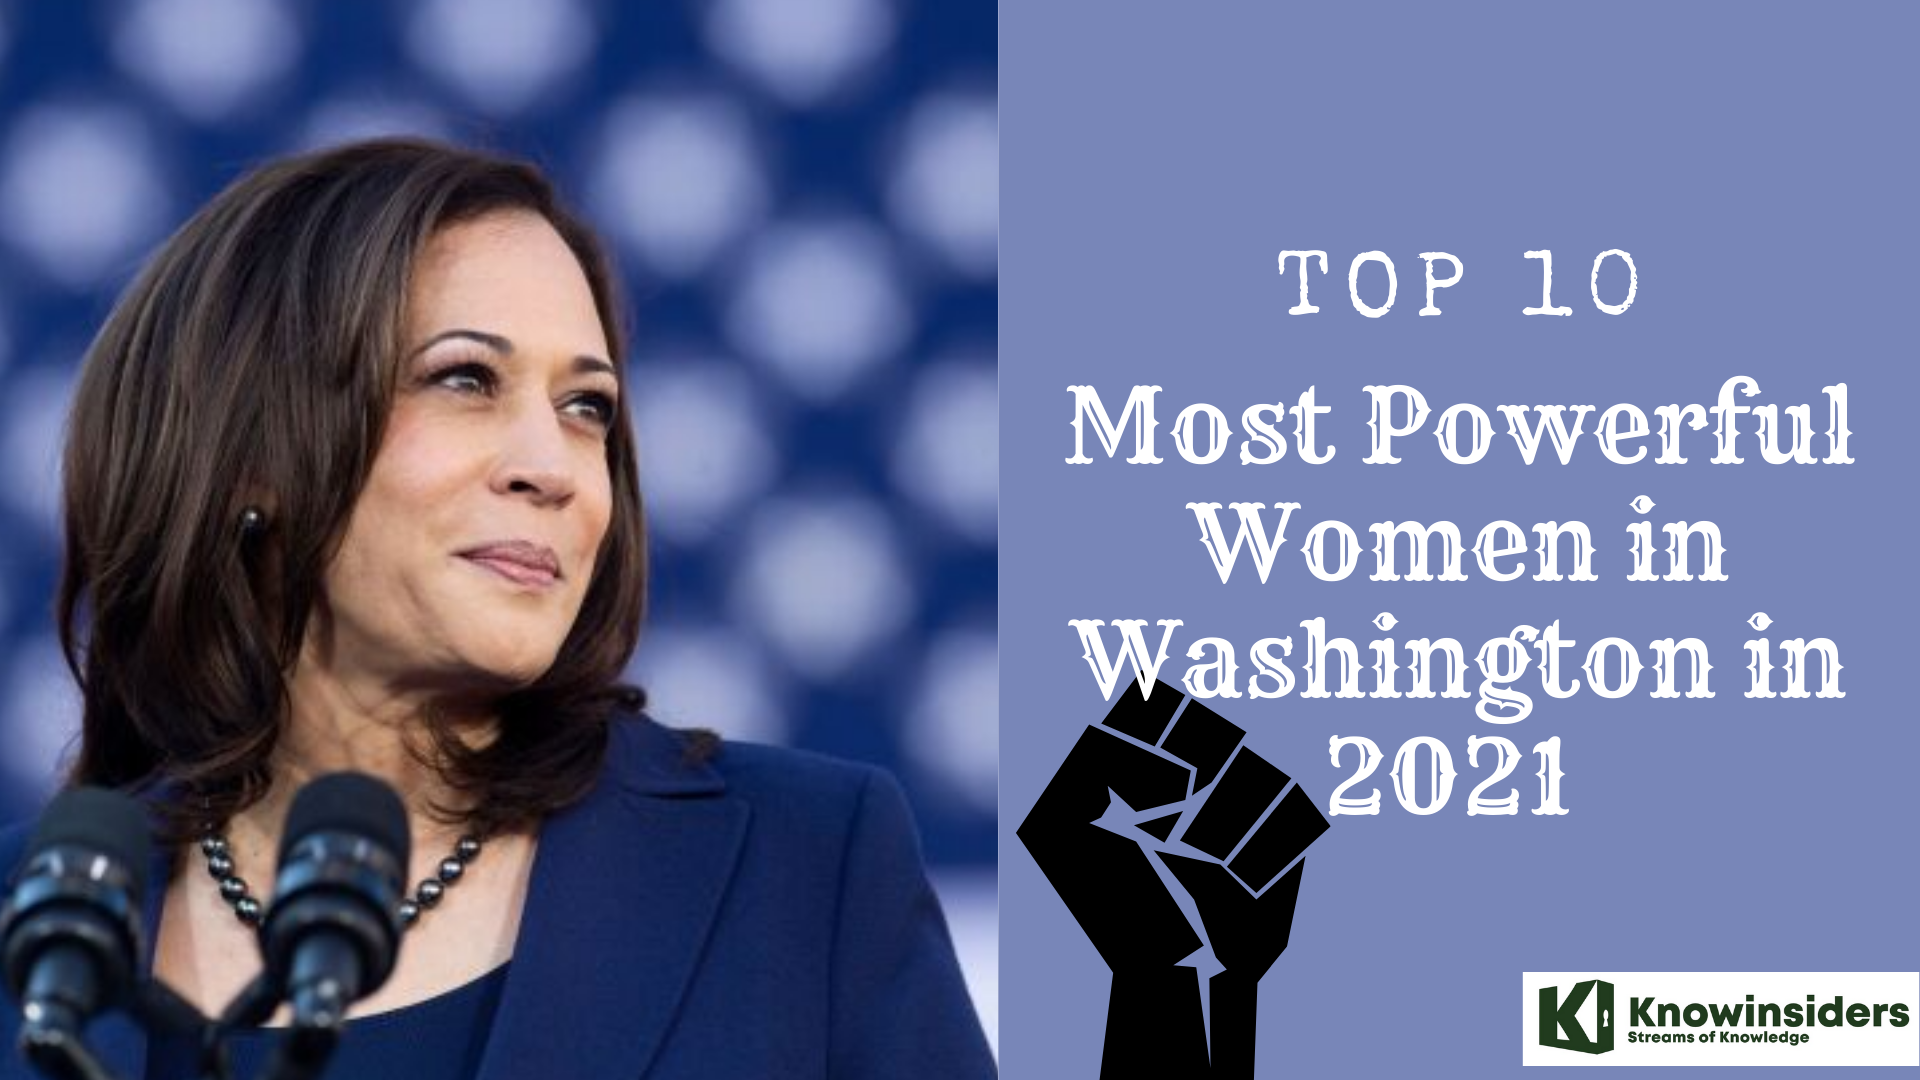 Top 10 Most Powerful Women in Washington in 2021 